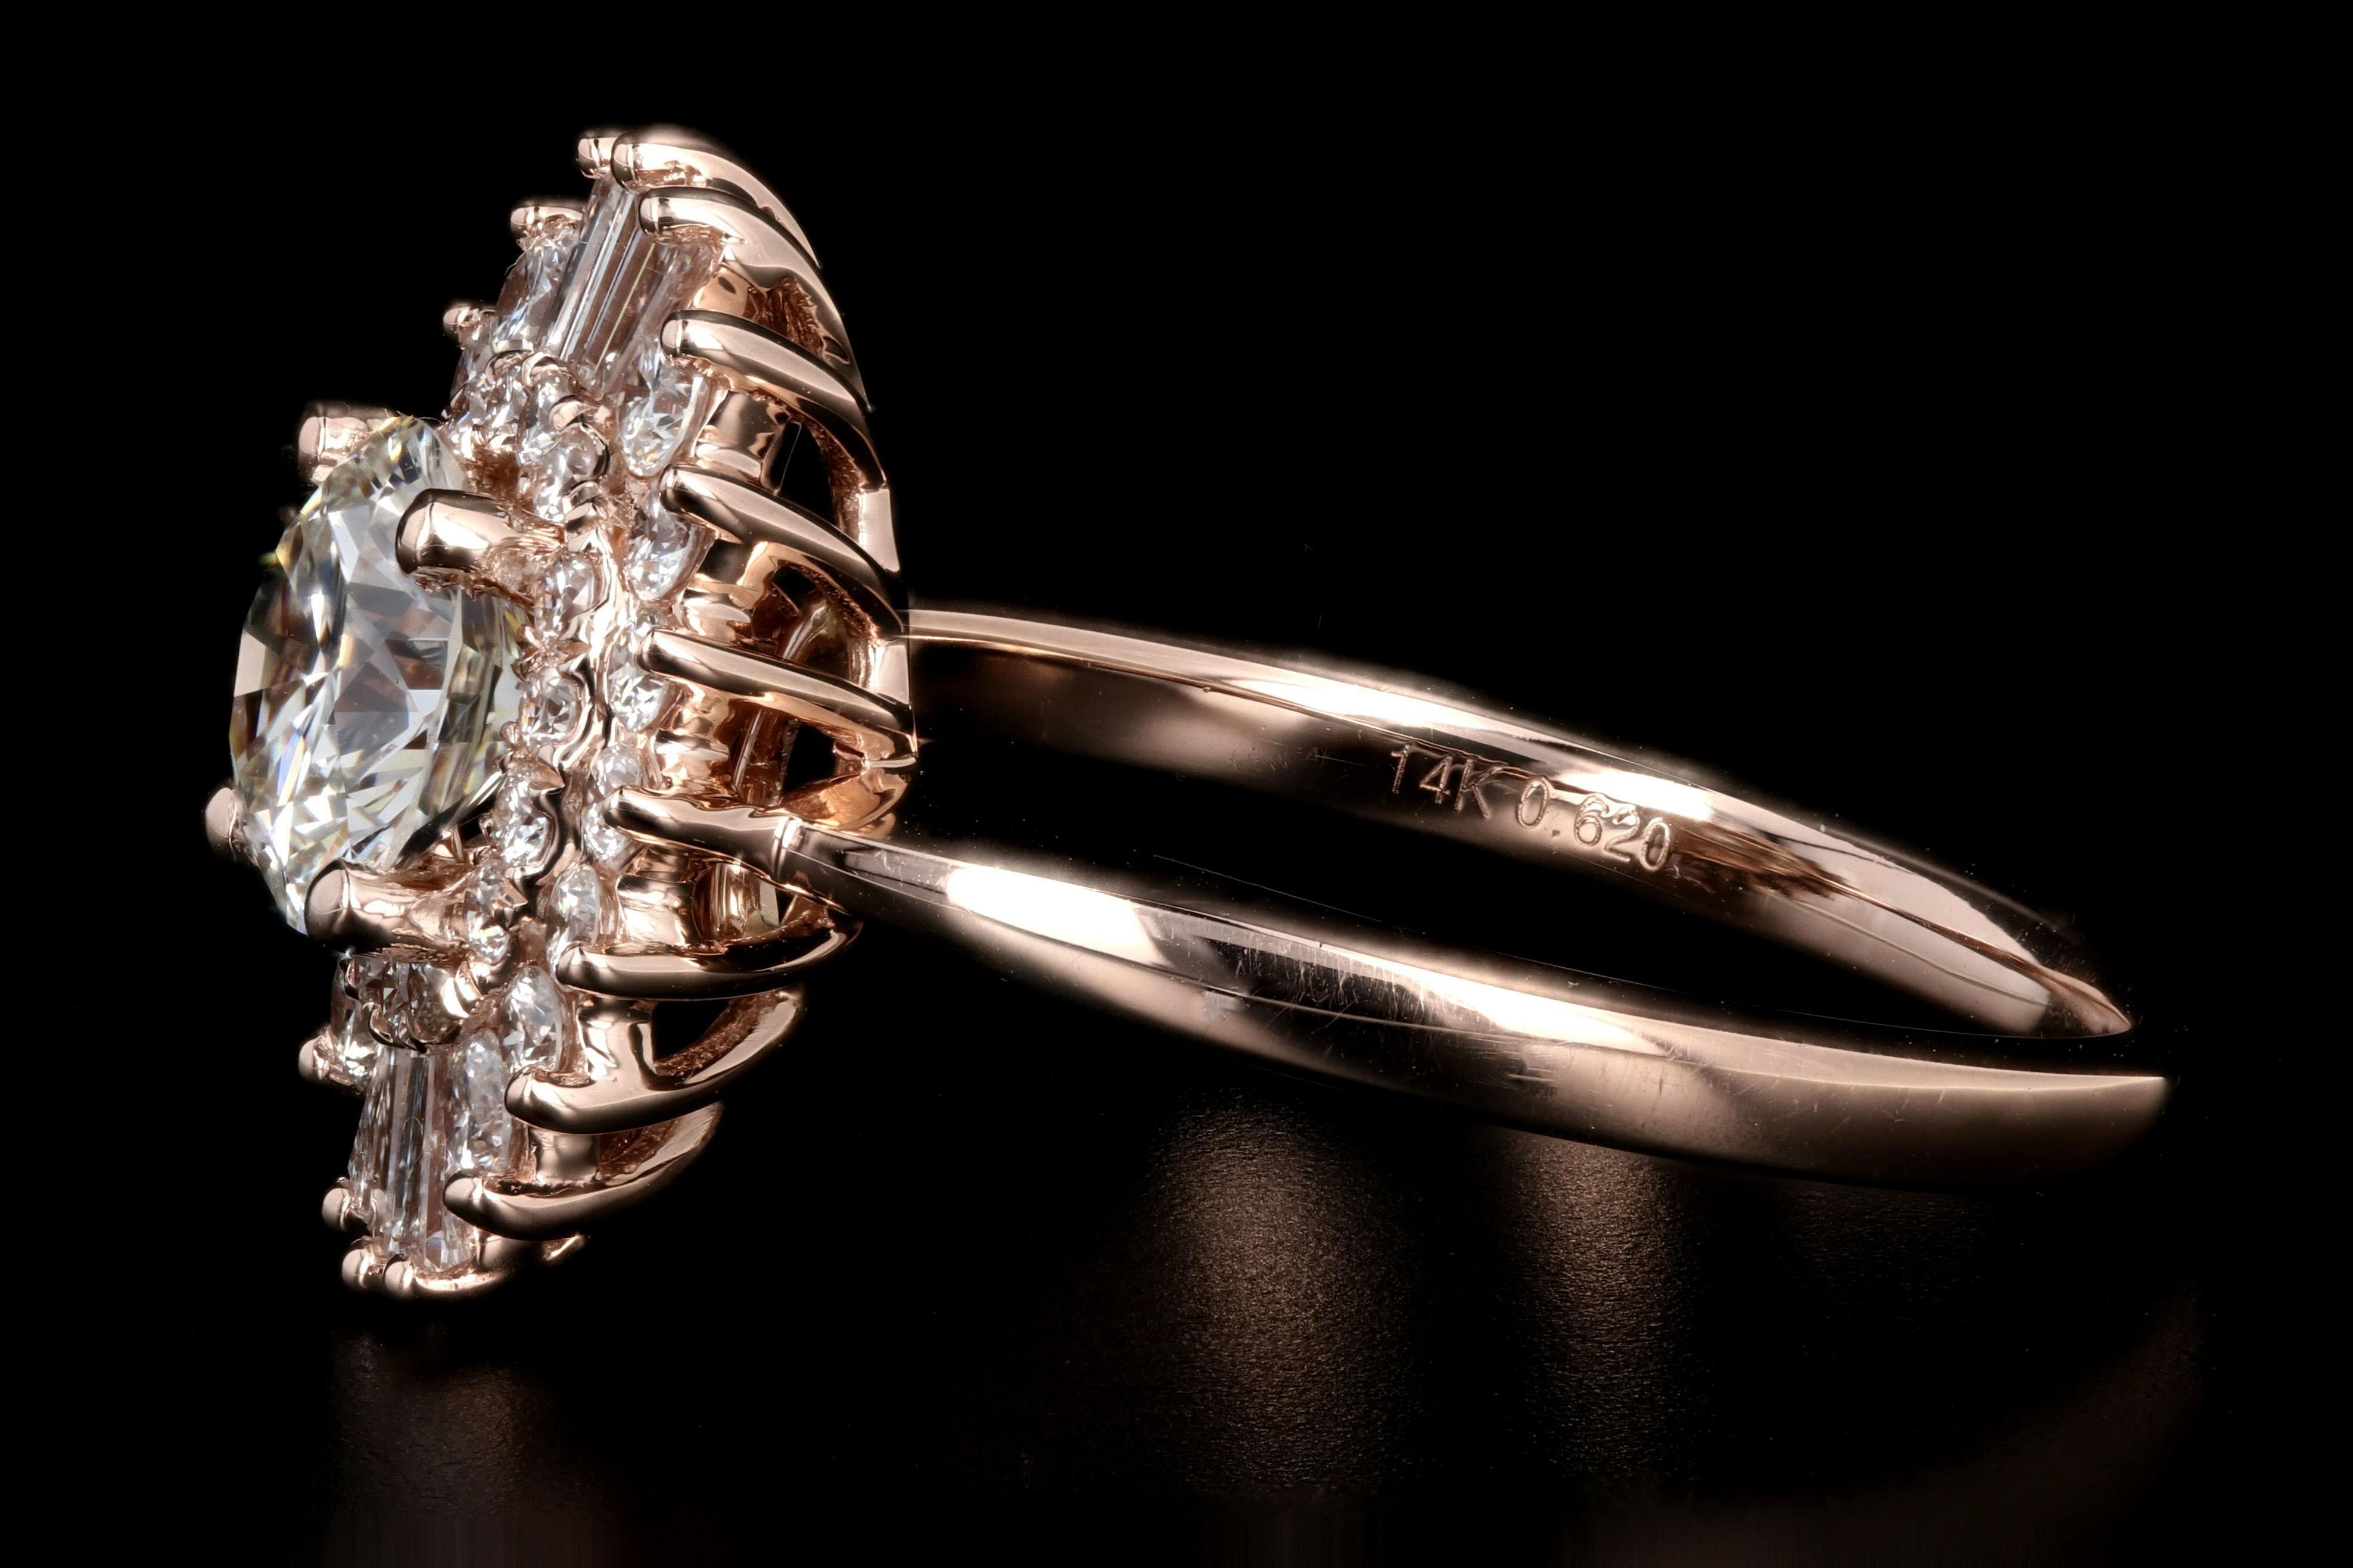 .88 carat diamond ring